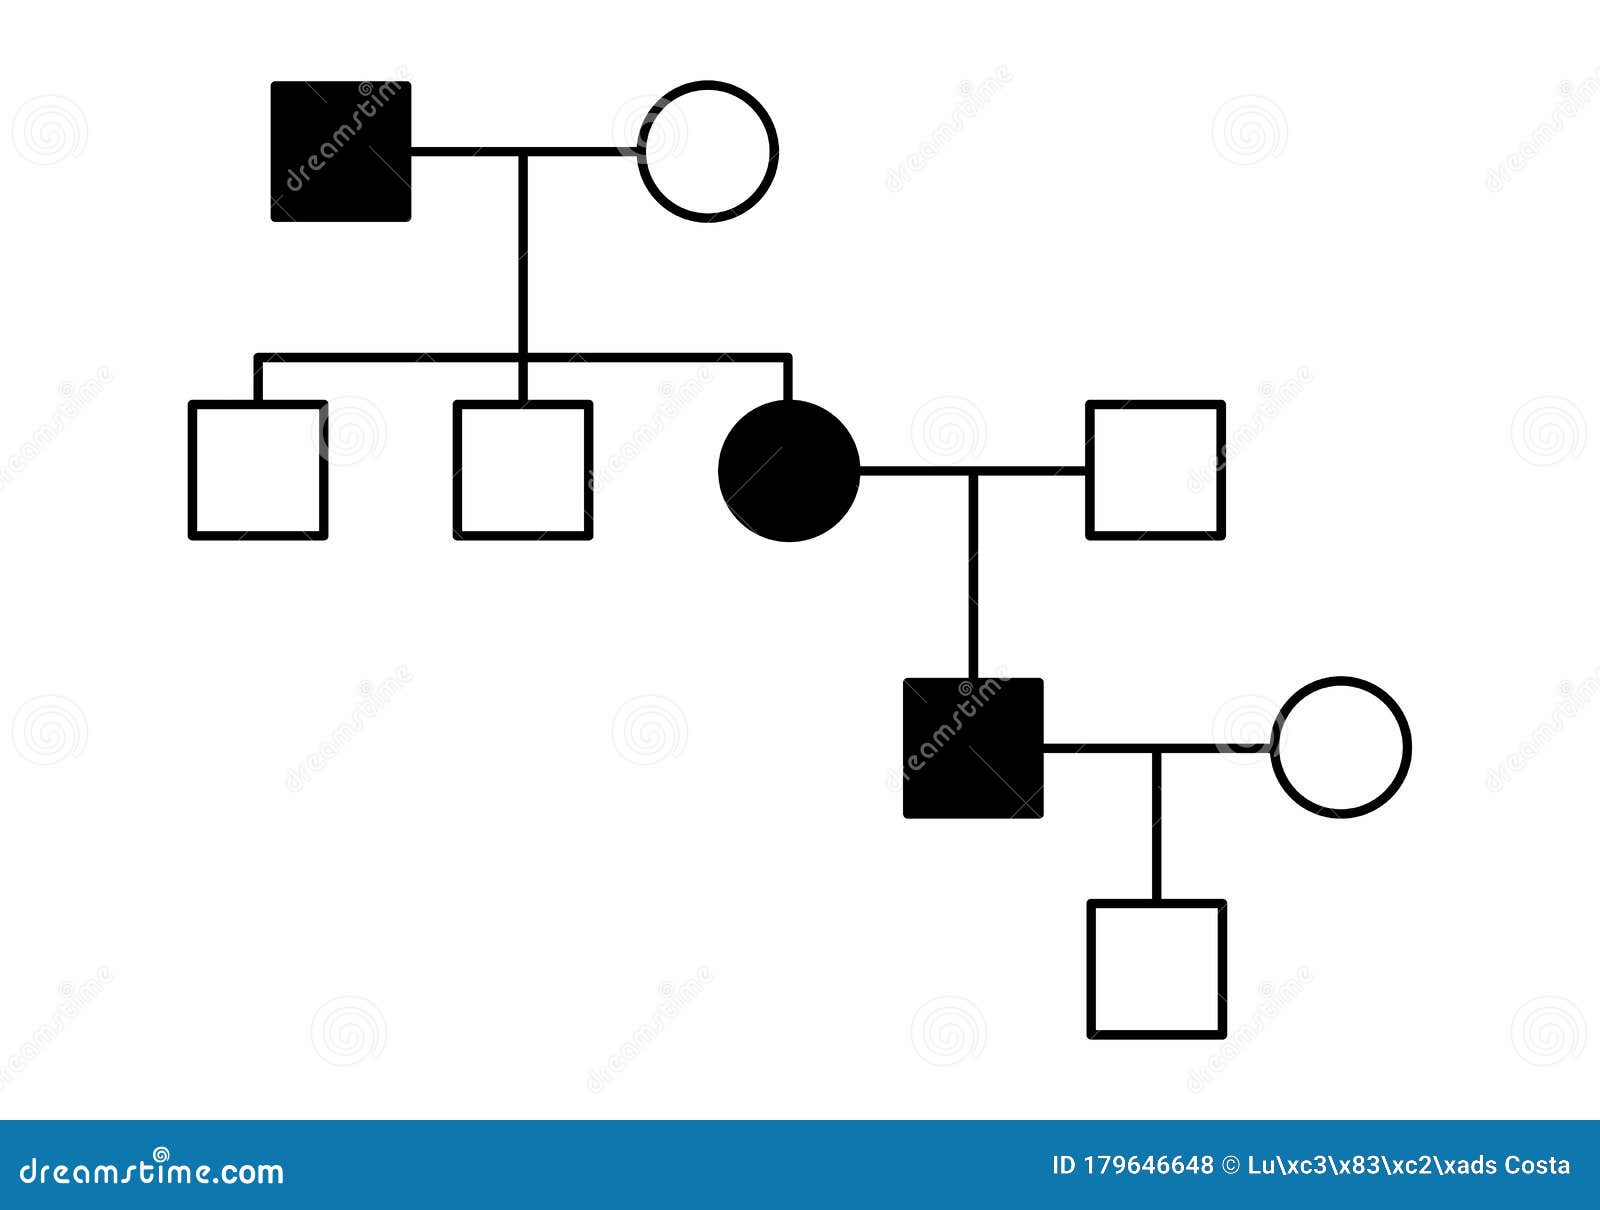 simple family diagram 